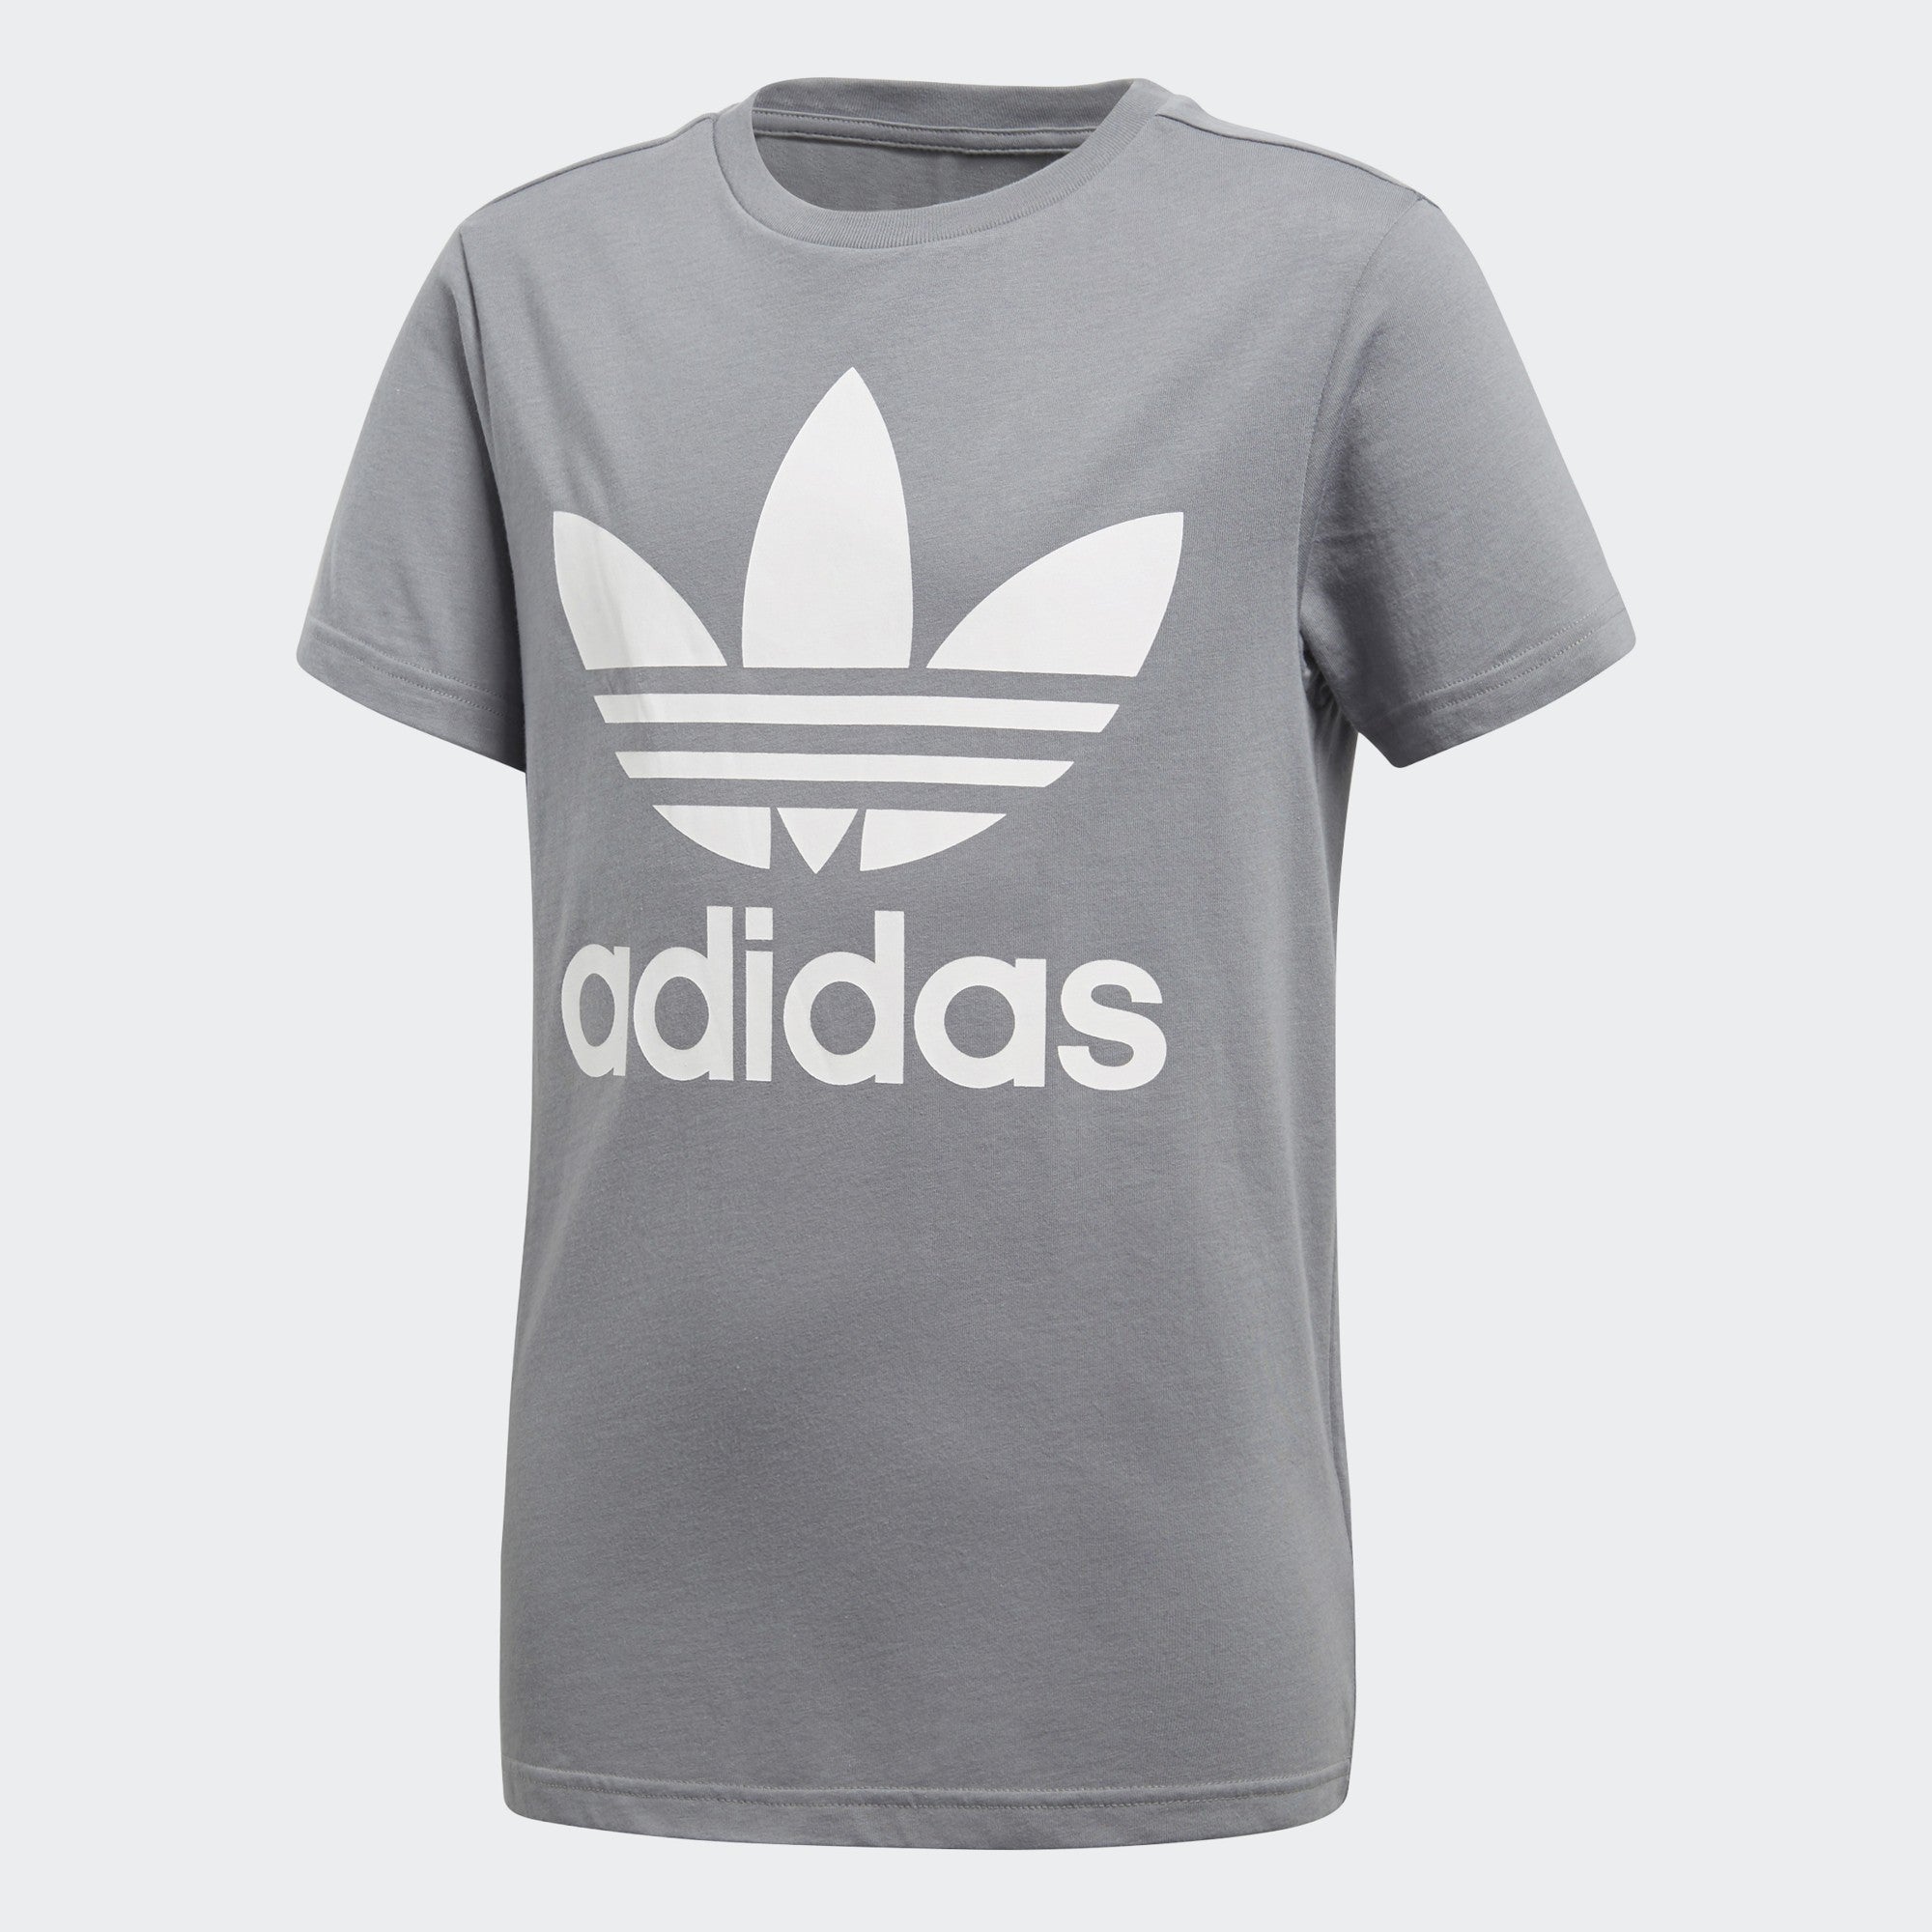 Adidas Kids' Shirt - White